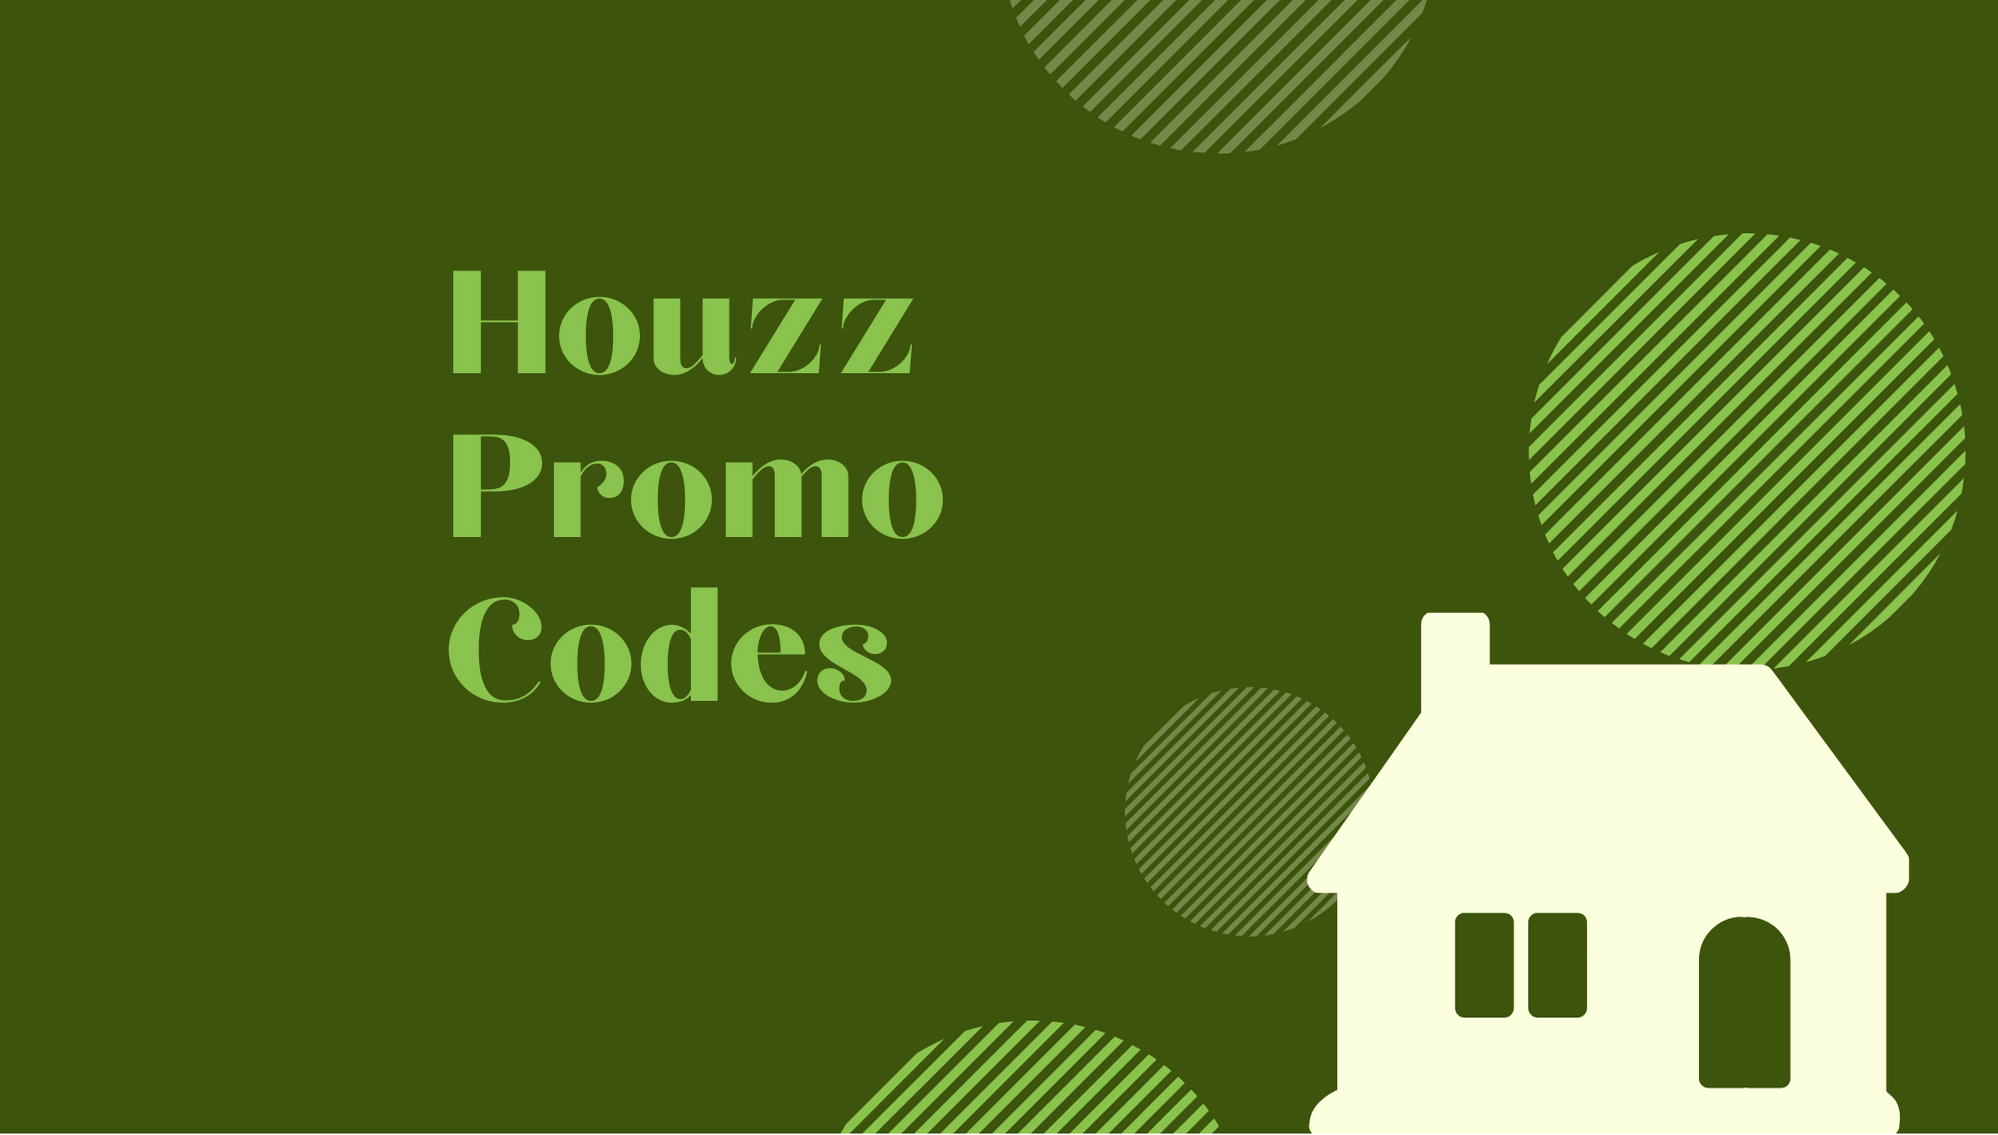 houzz promo code september 2021